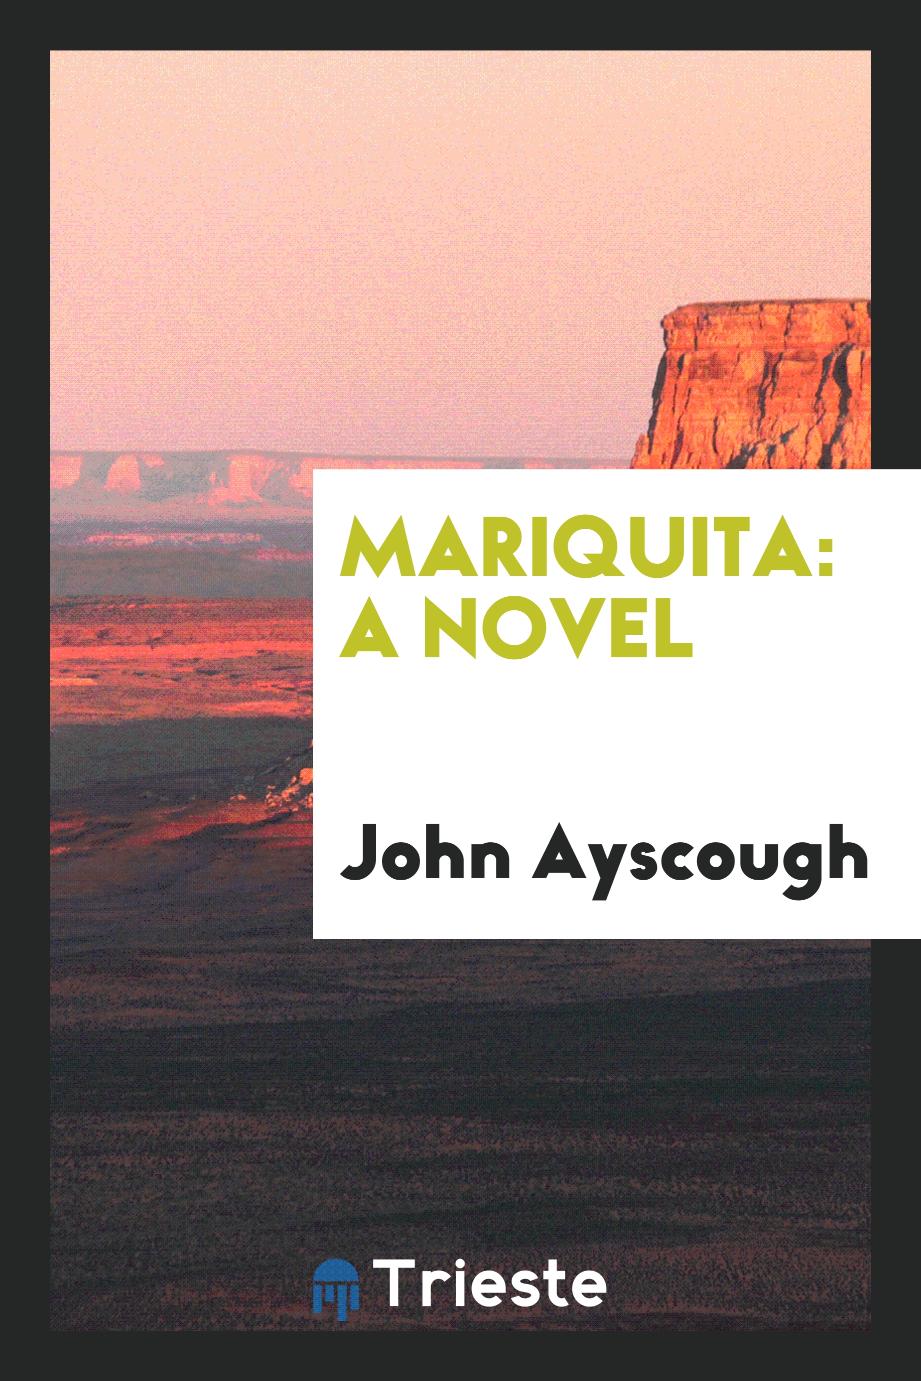 Mariquita: a novel